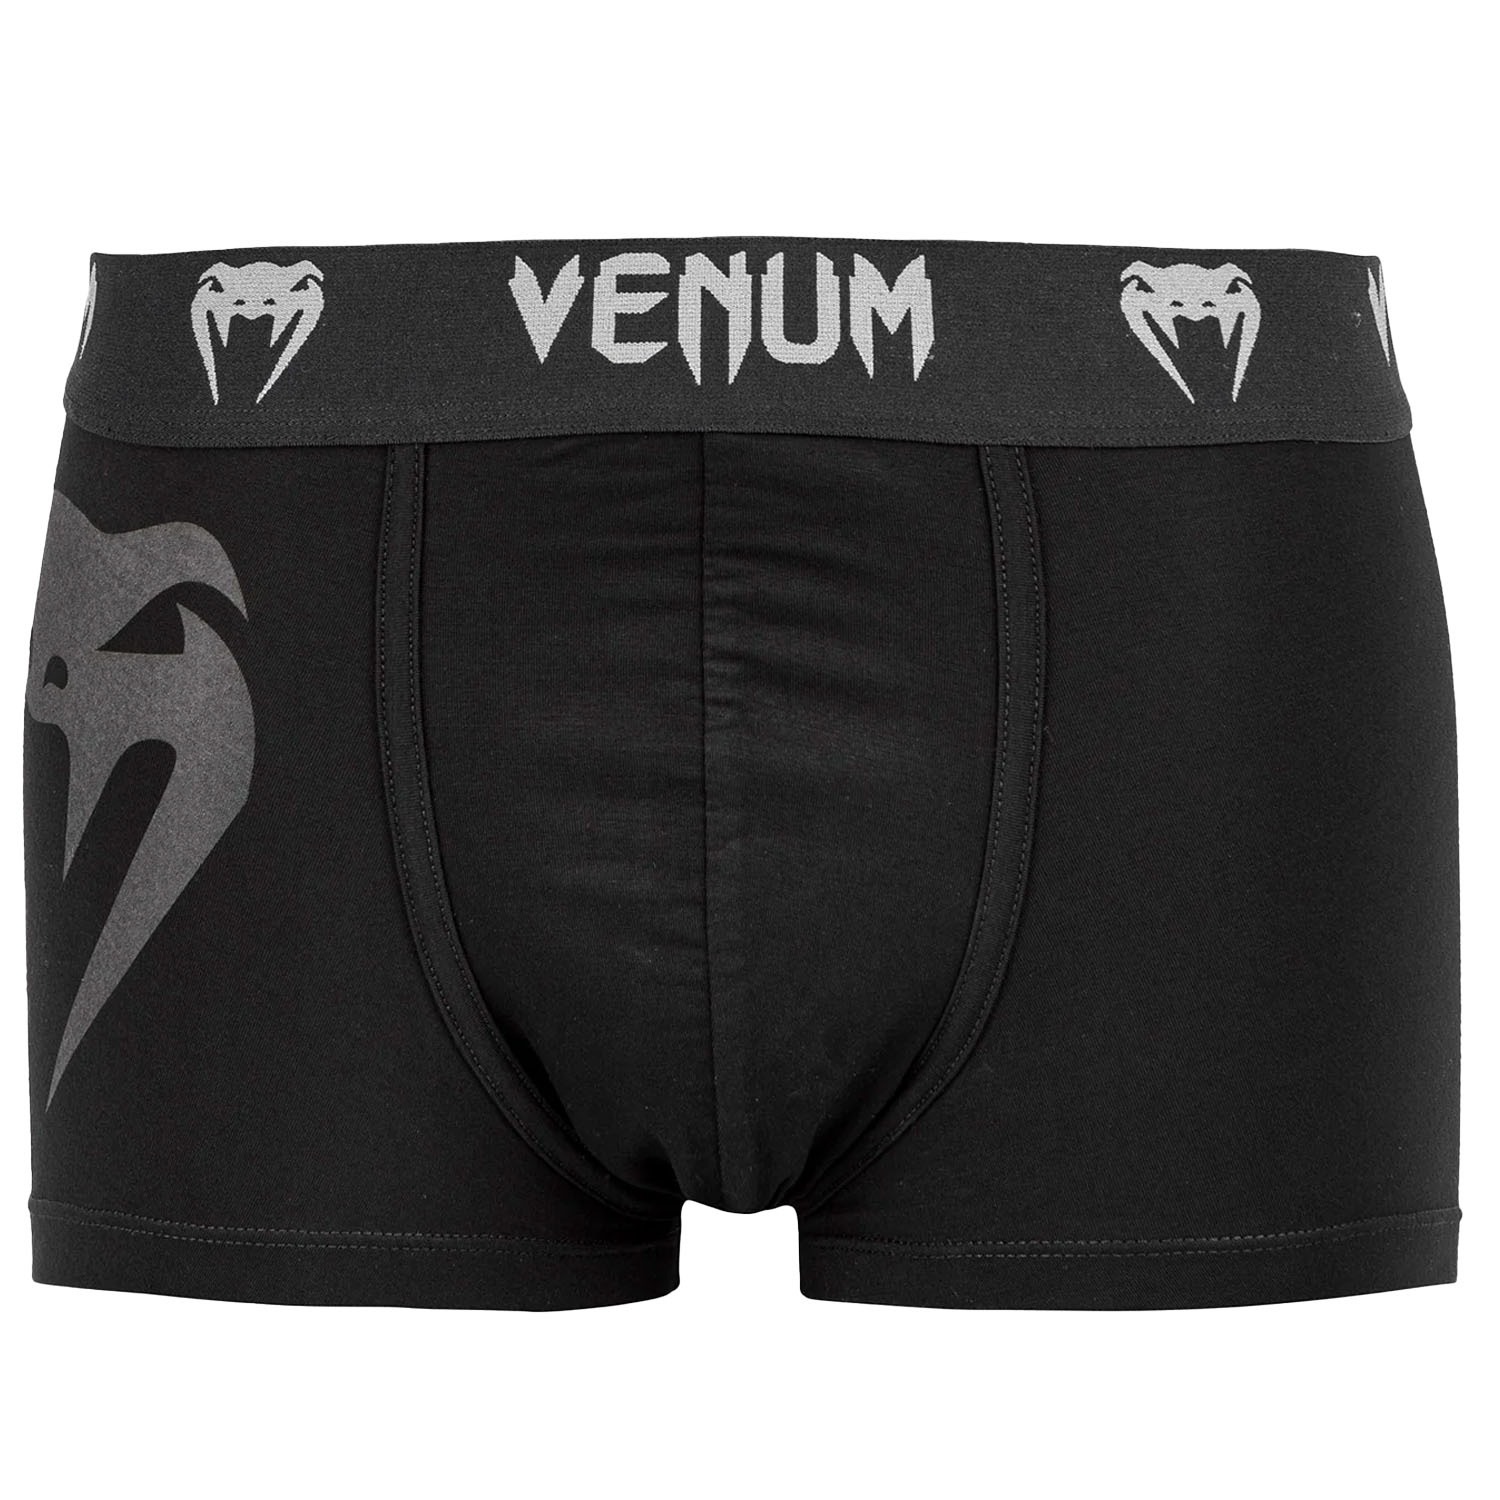 VENUM Boxer Shorts, Giant, black